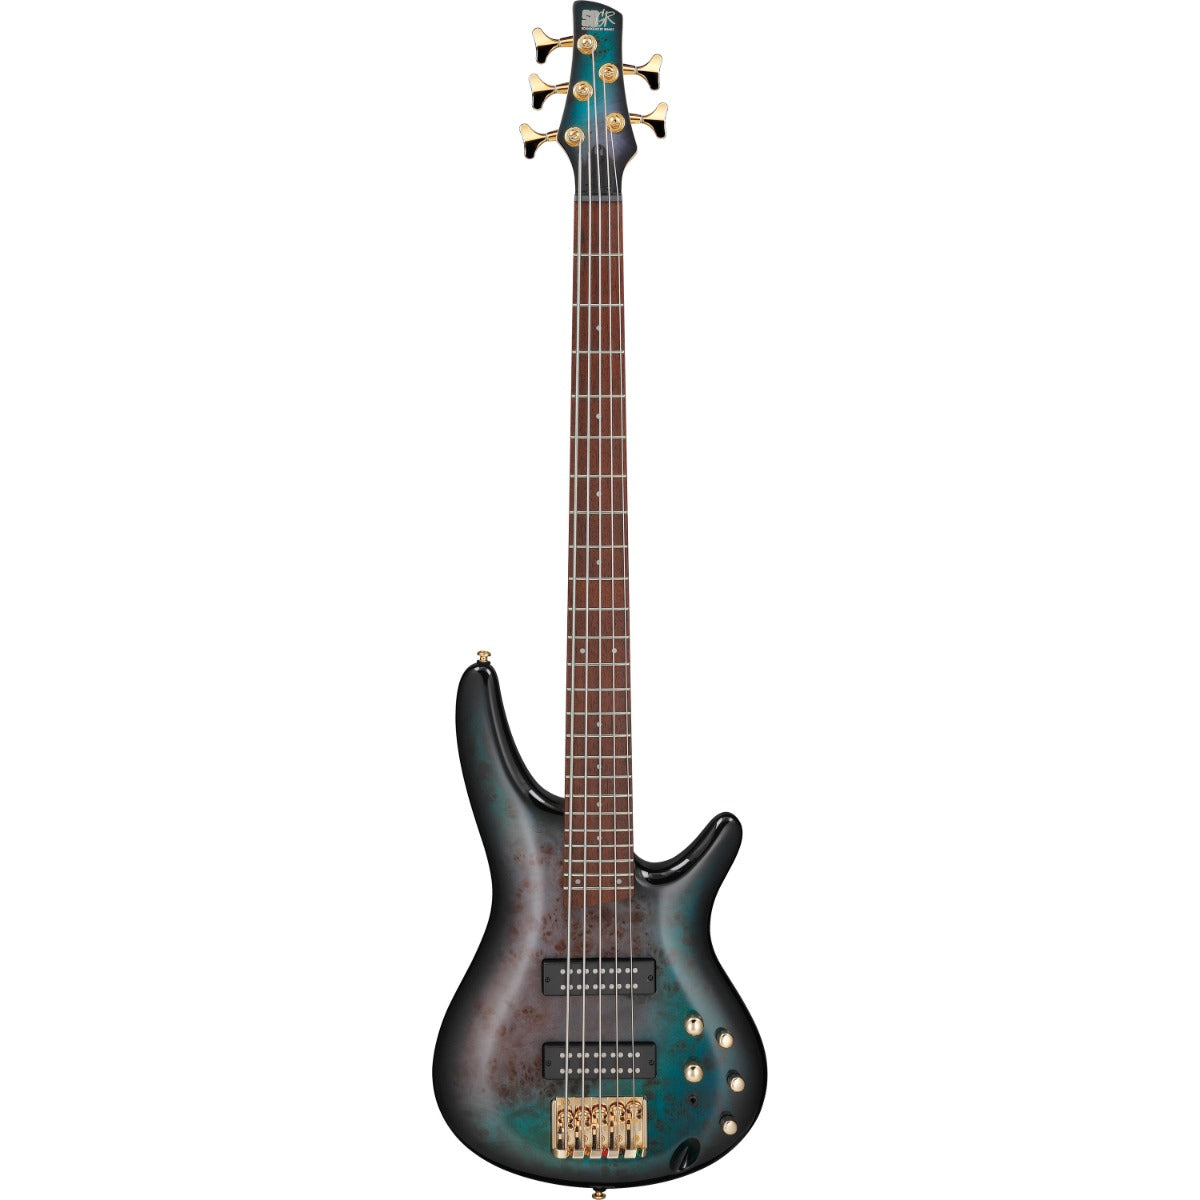  Ibanez SR405EPBDX 5-String Bass Guitar - Jatoba, Tropical Seafloor view 2